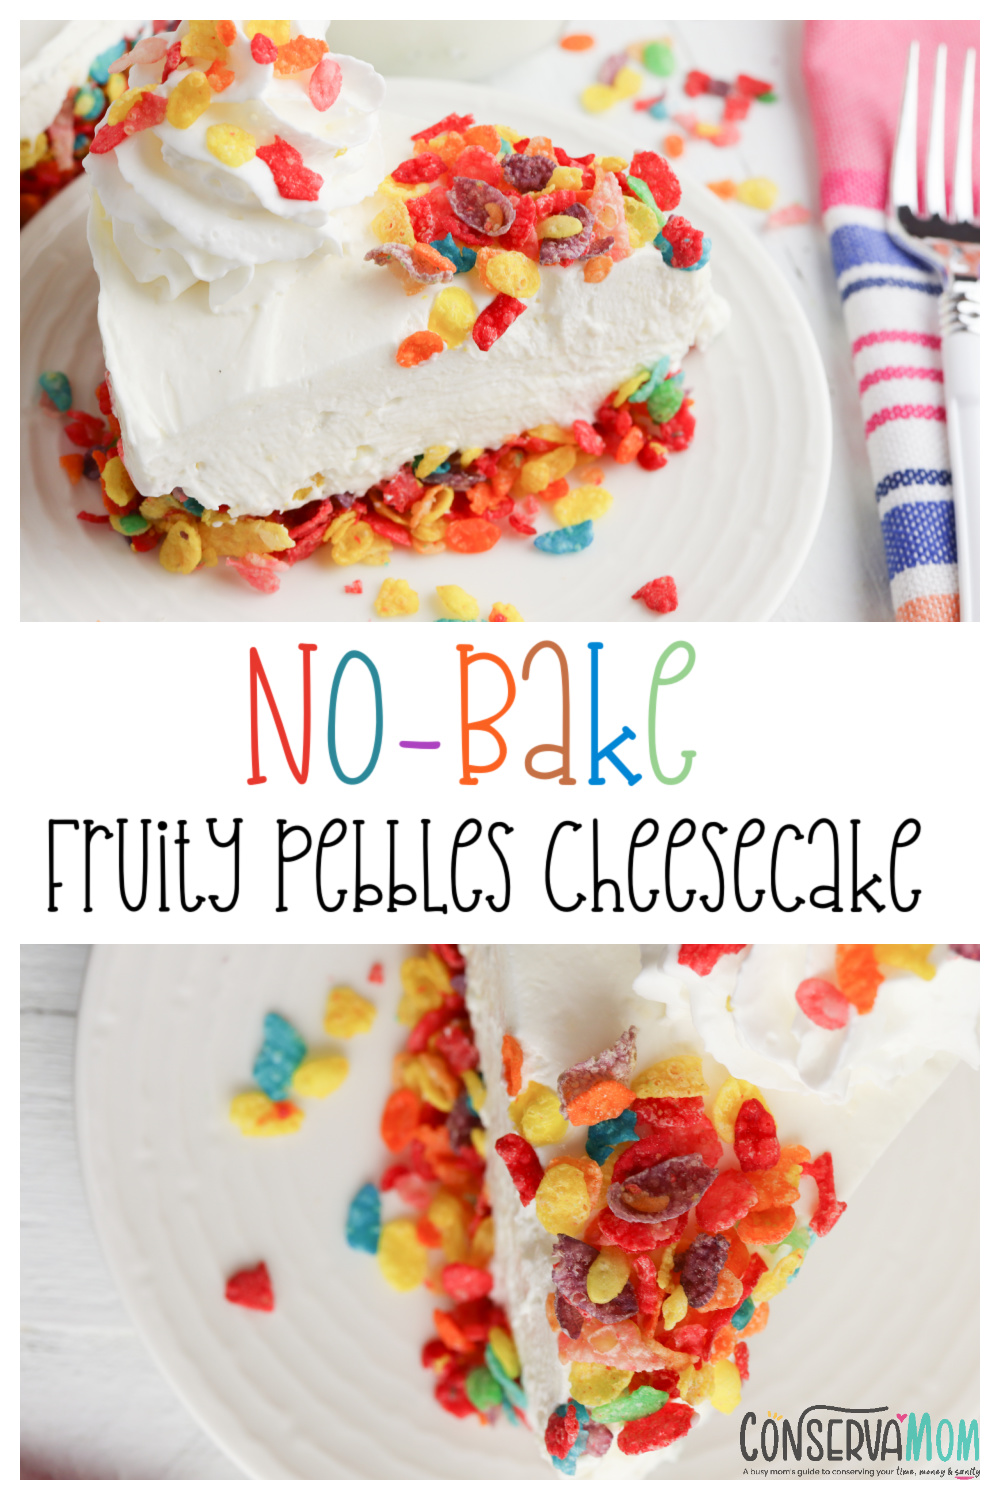 No-Bake Fruity Pebbles Cheesecake recipe